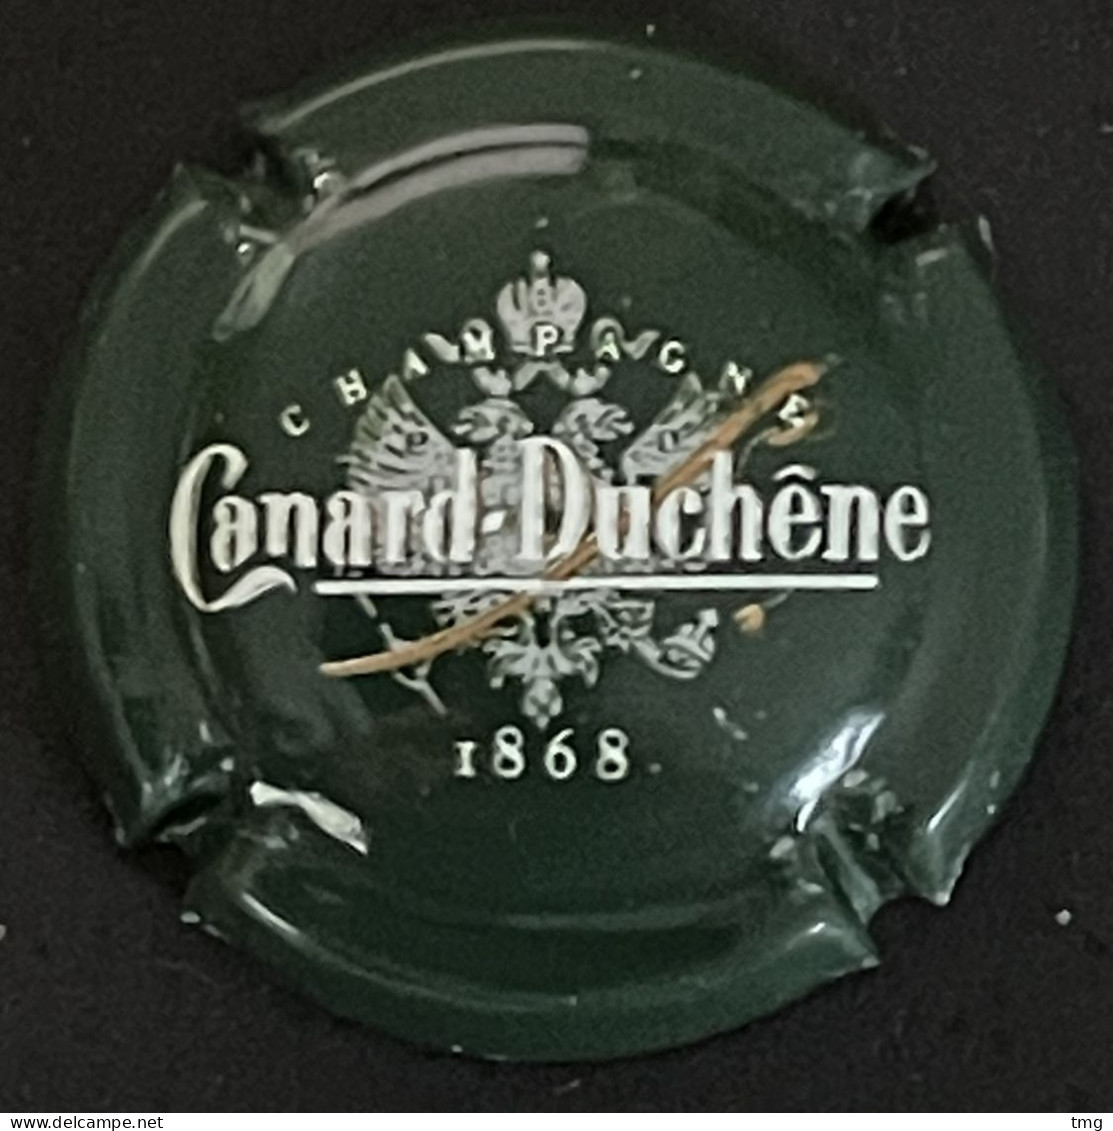 102 - 61 - Canard-Duchêne, Vert Bouteille, Petit Sabre, Grand 1868 (côte 1,5 €) Capsule De Champagne - Canard Duchêne